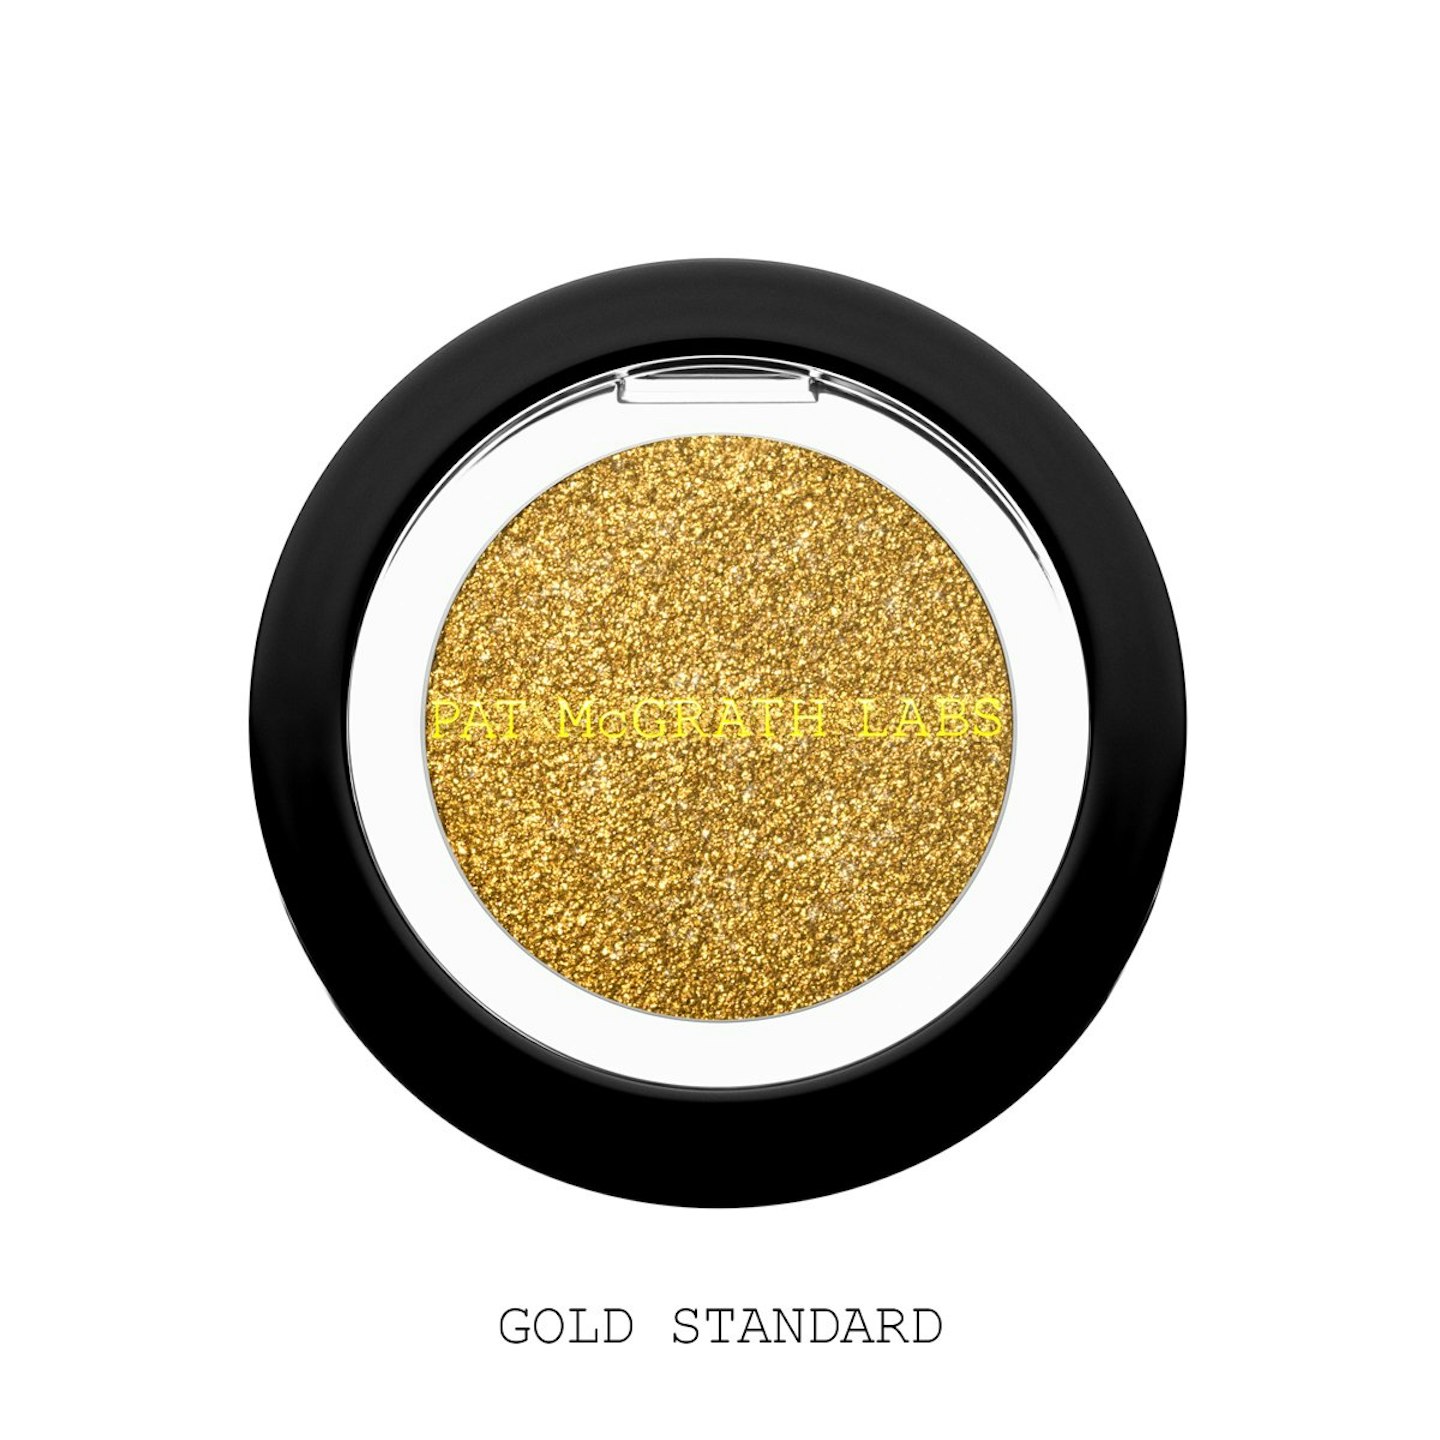 Pat McGrath Eyedols Eye Shadow in Gold Standard, £23